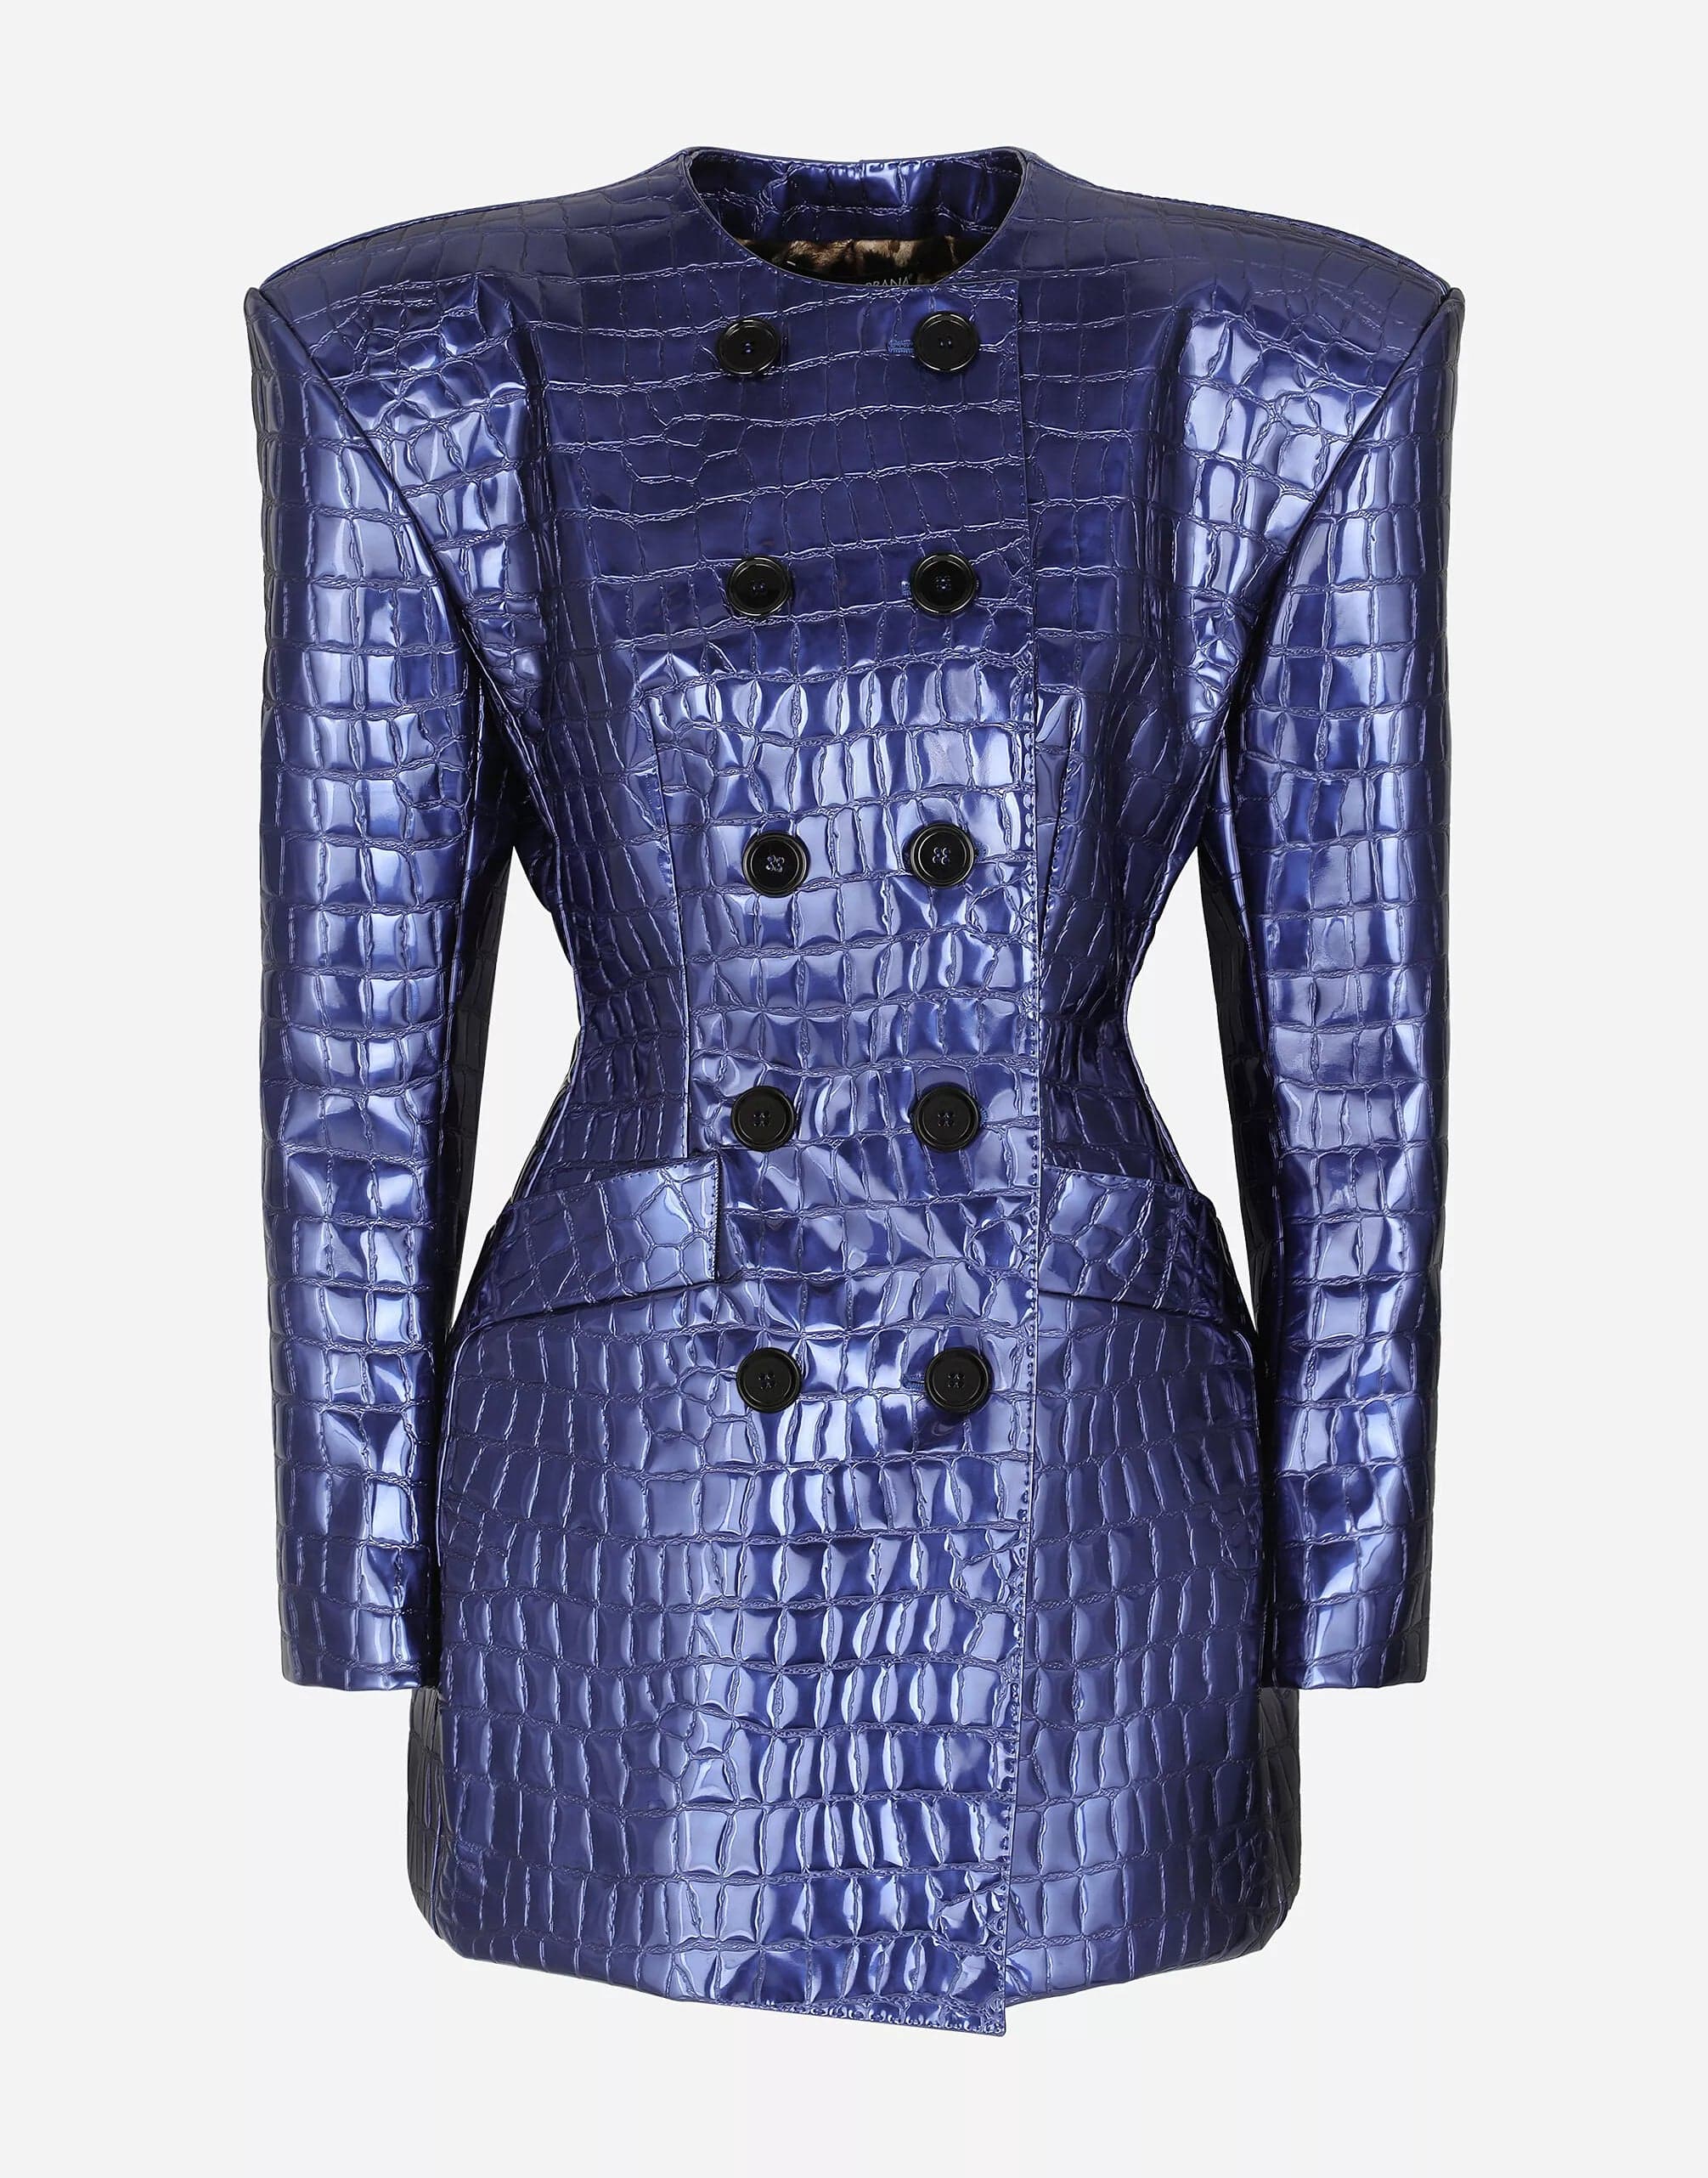 Dolce & Gabbana Chic Croco-Print Patent Leather Coat